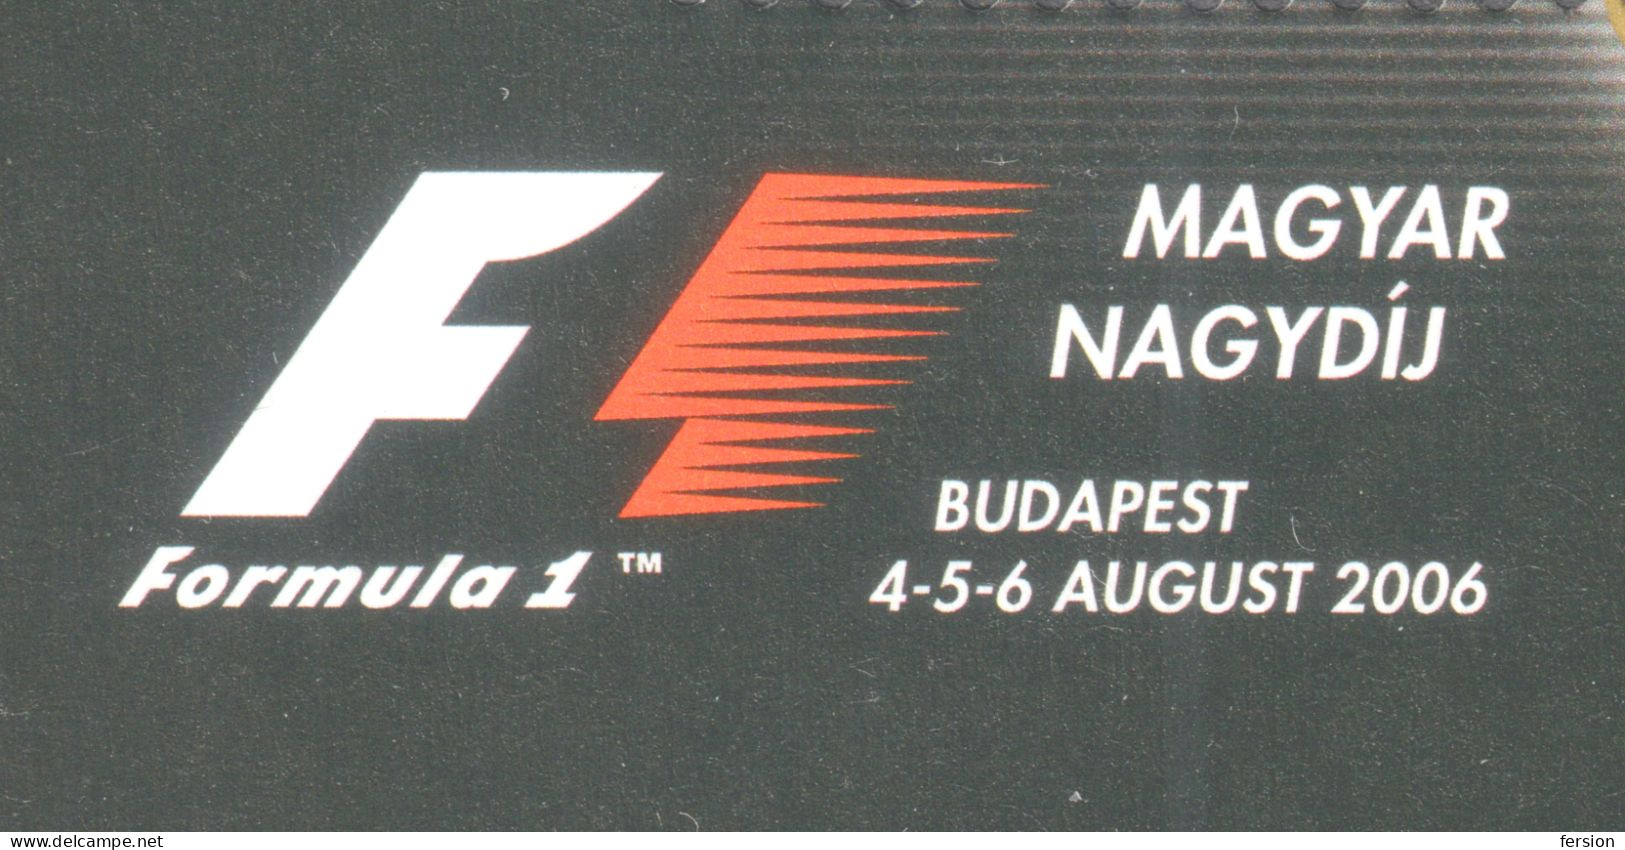 2006 Hungary Grand Prix 20th Anniv Formula 1 F1 HUNGARORING Bernie Ecclestone FERRARI Philatelist Memorial Sheet - Automobile